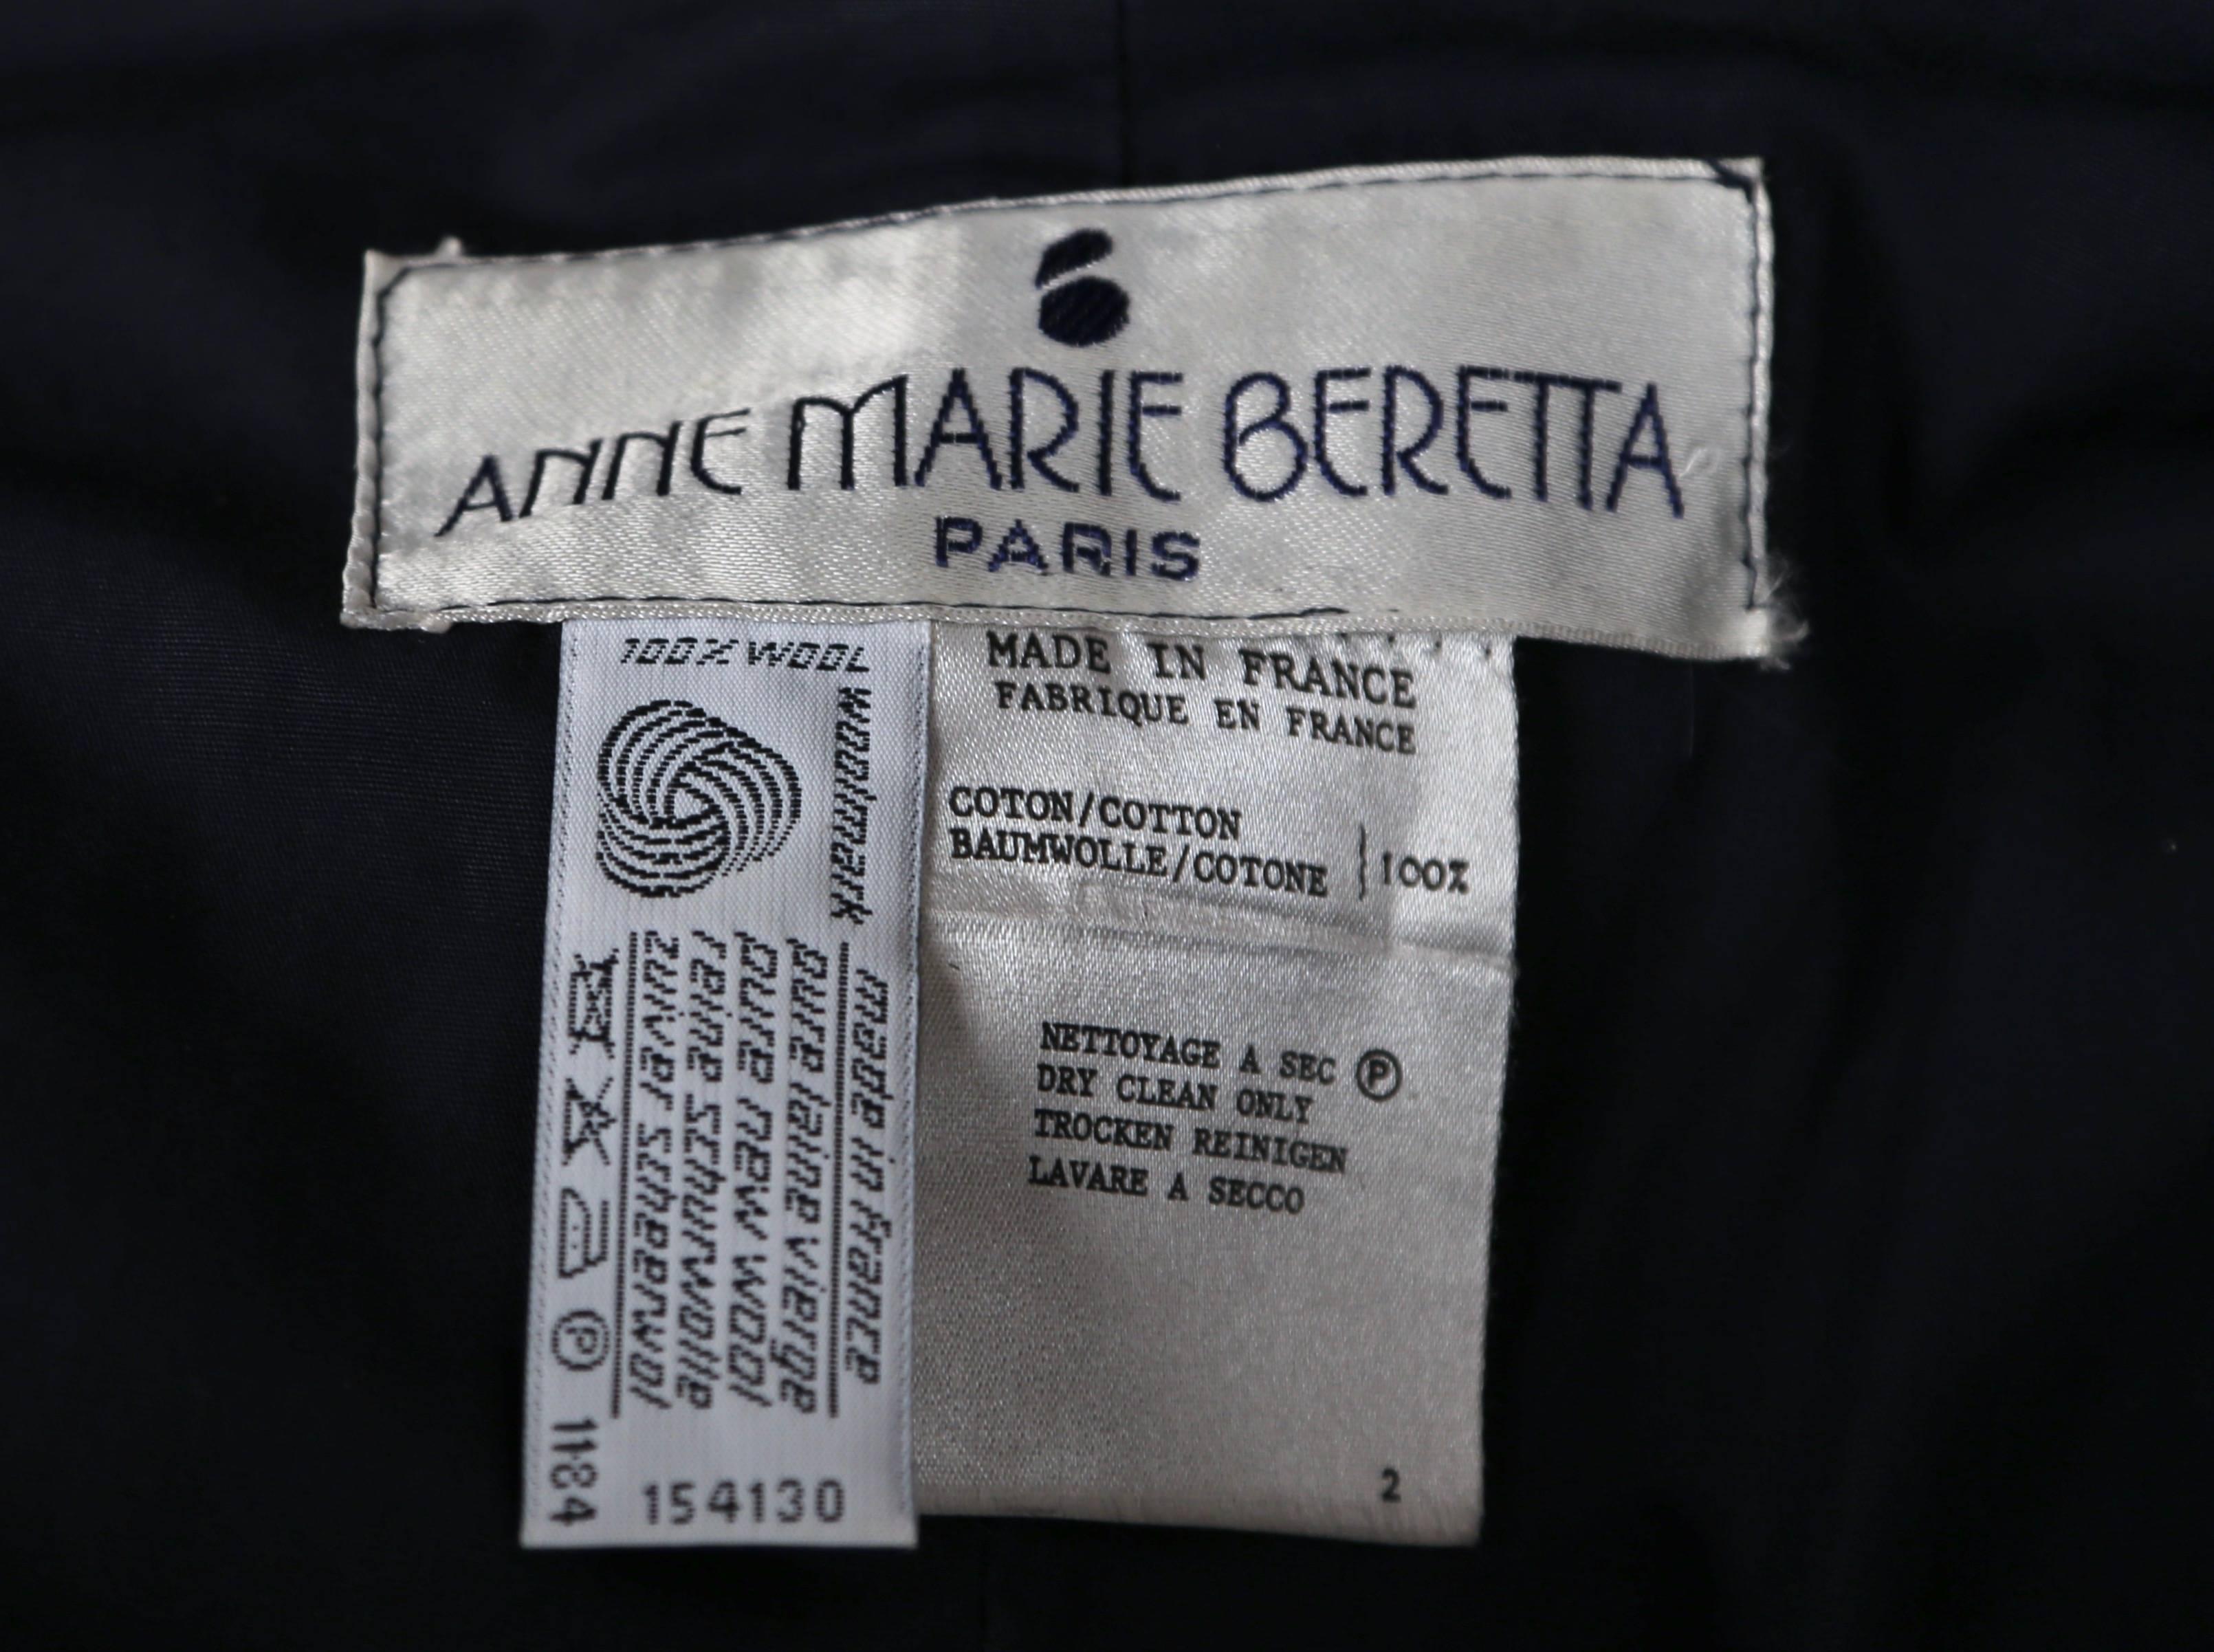 Black 1982 ANNE MARIE BERETTA dark navy oversized wool coat with metal snaps